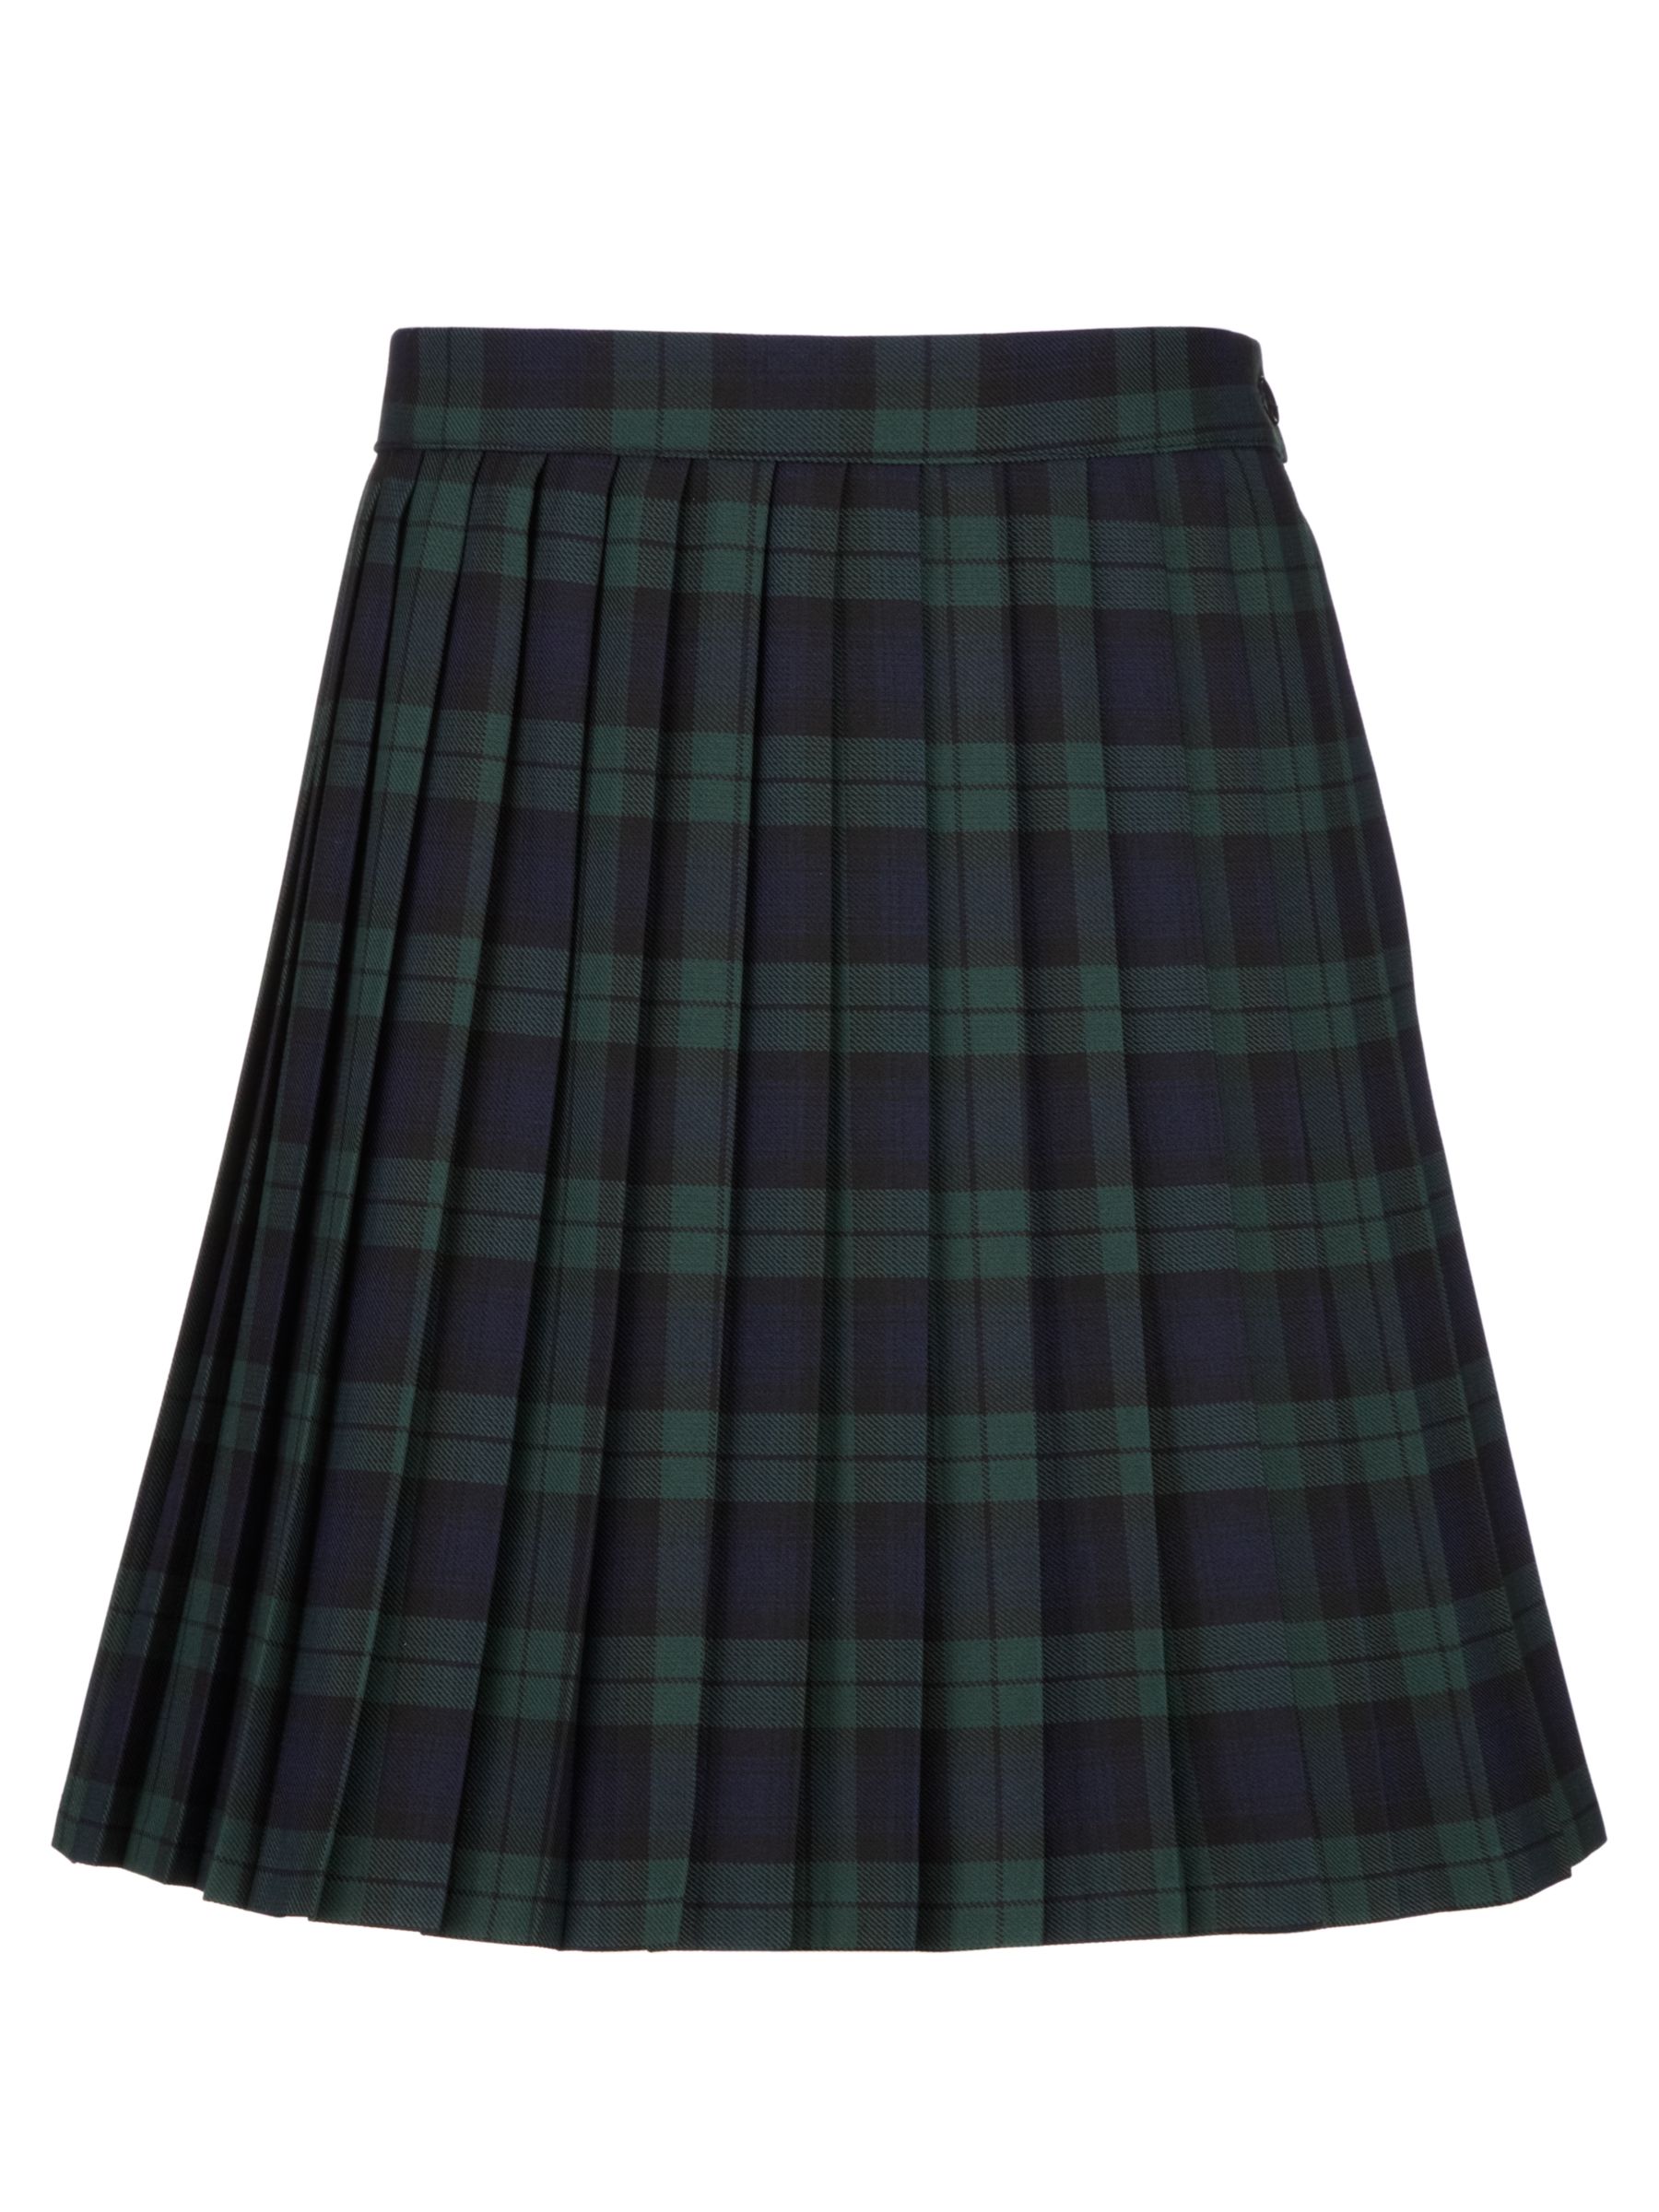 Girls' Pleated Tartan School Skirt, Green/Navy at John Lewis & Partners